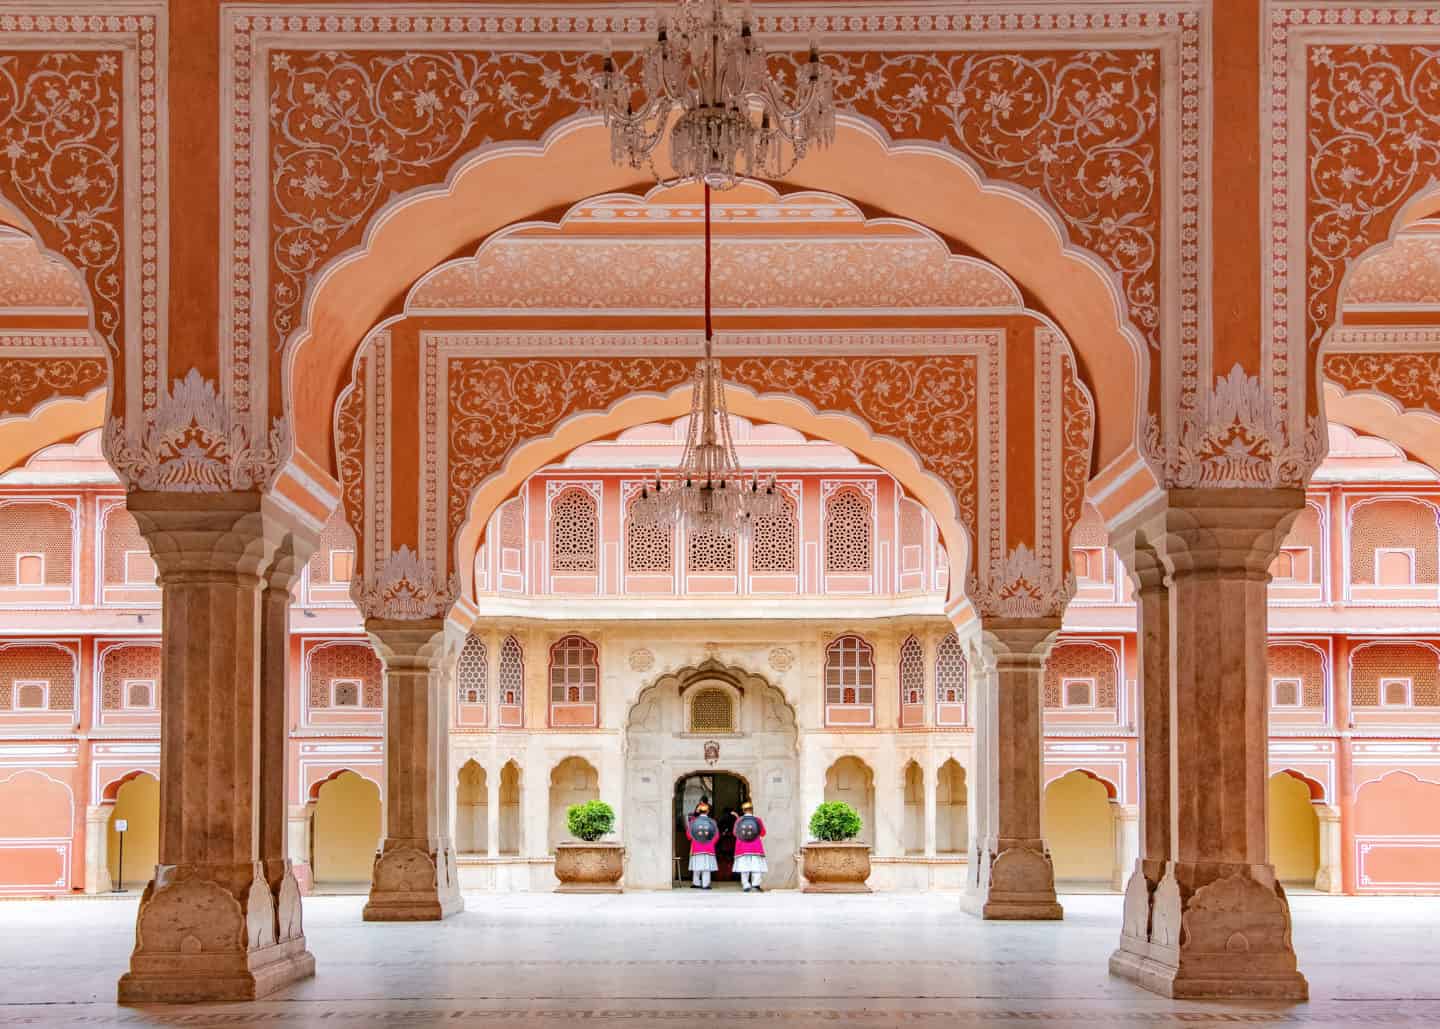 Places to visit in Jaipur | Jaipur city palace in Jaipur city, Rajasthan, India.